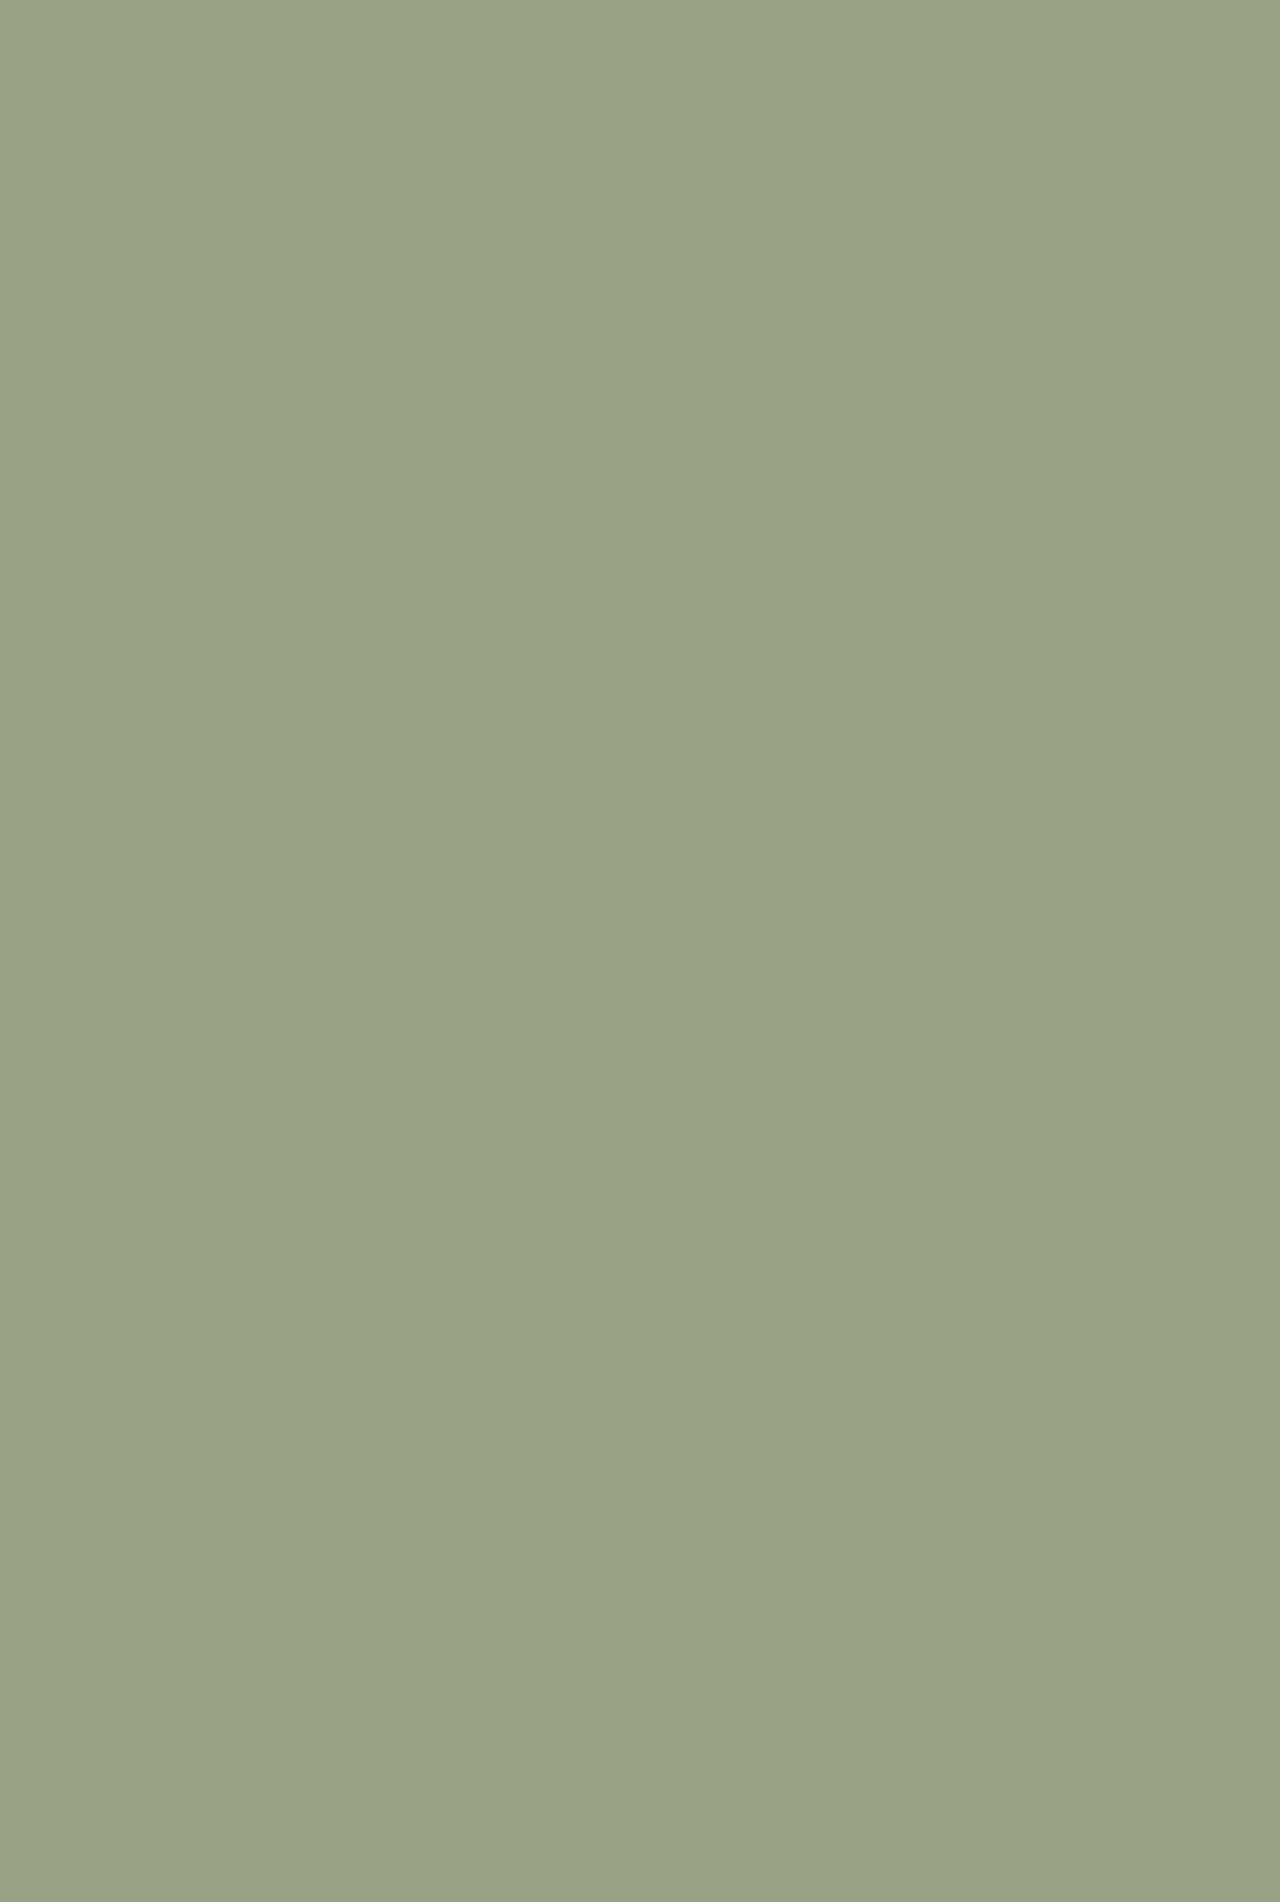 Plain Light Olive Green Background